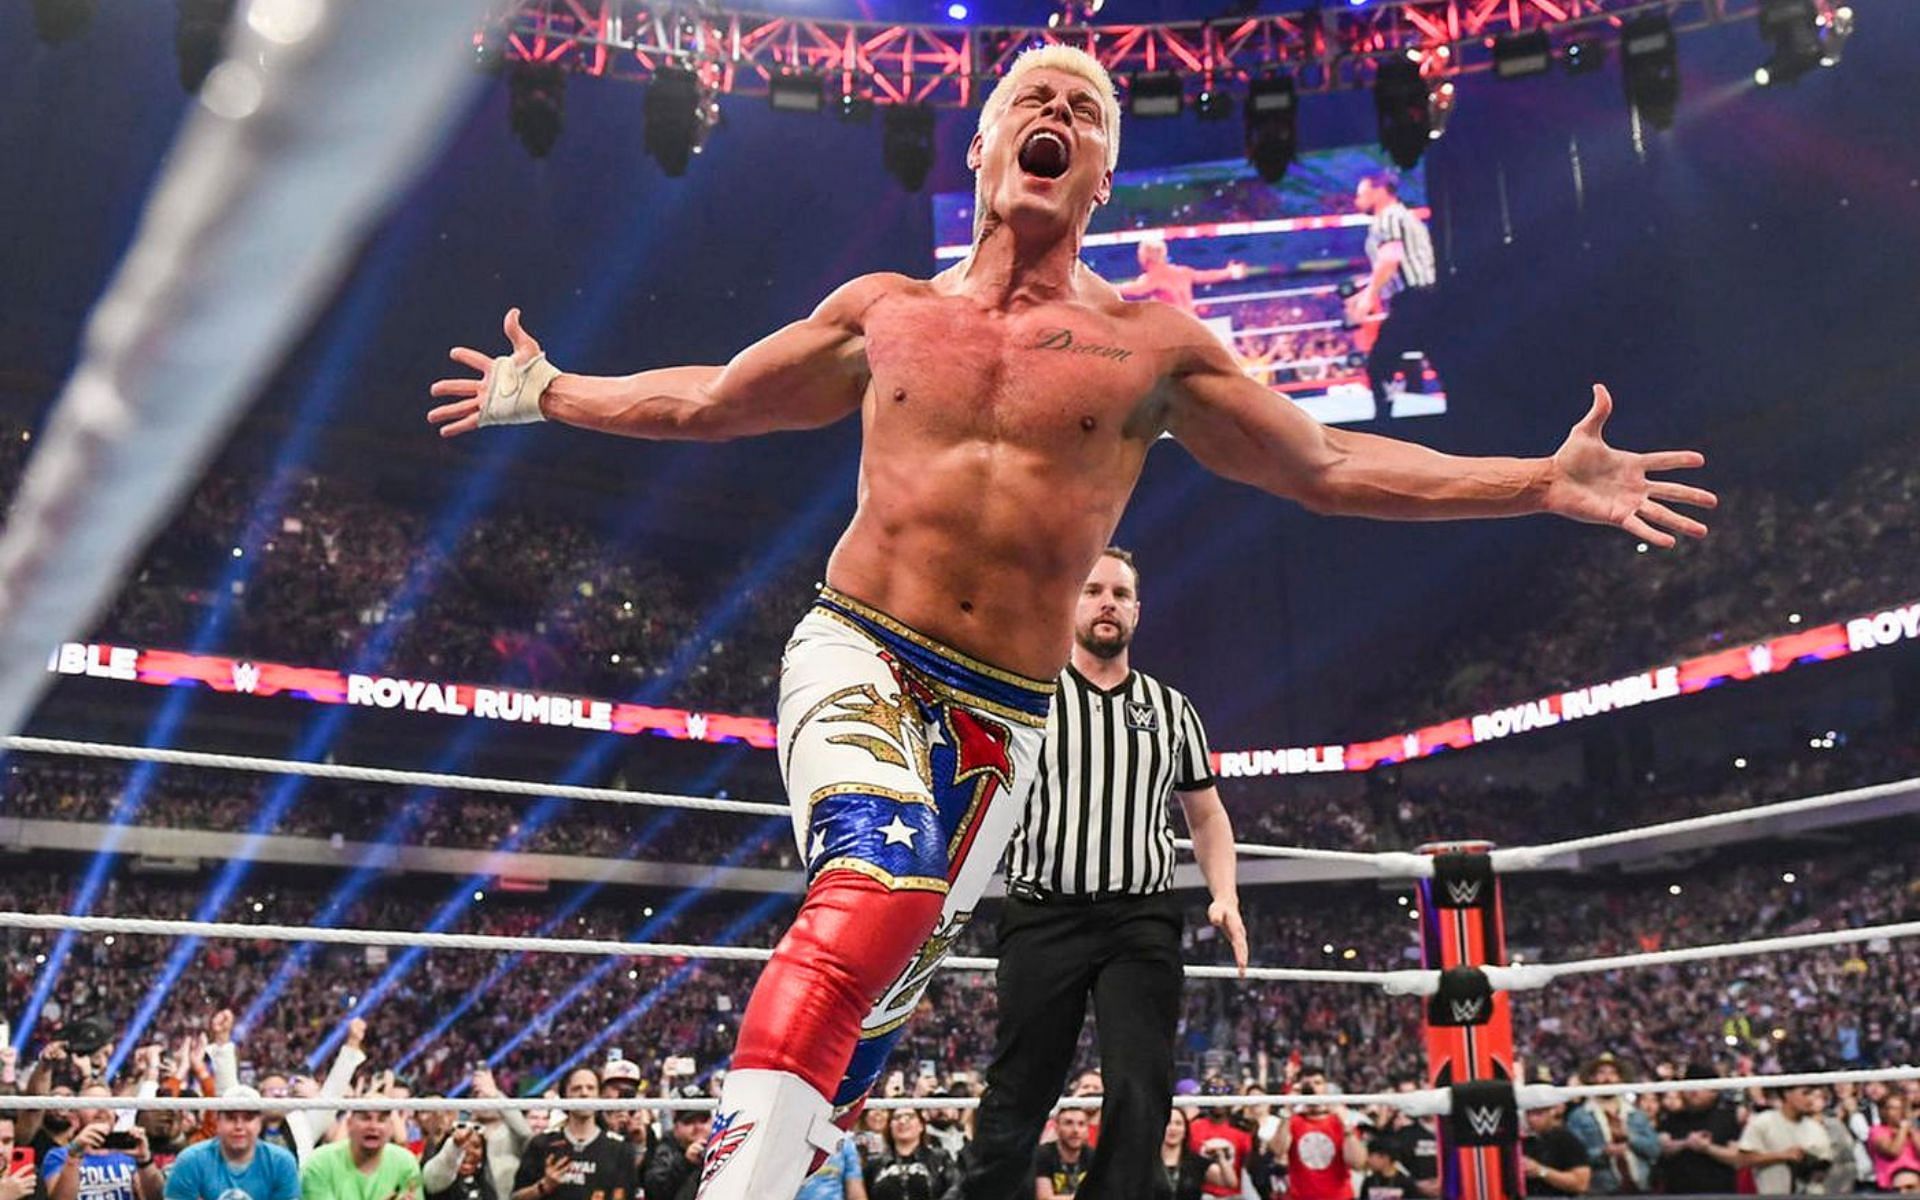 Cody Rhodes won his first Royal Rumble match 